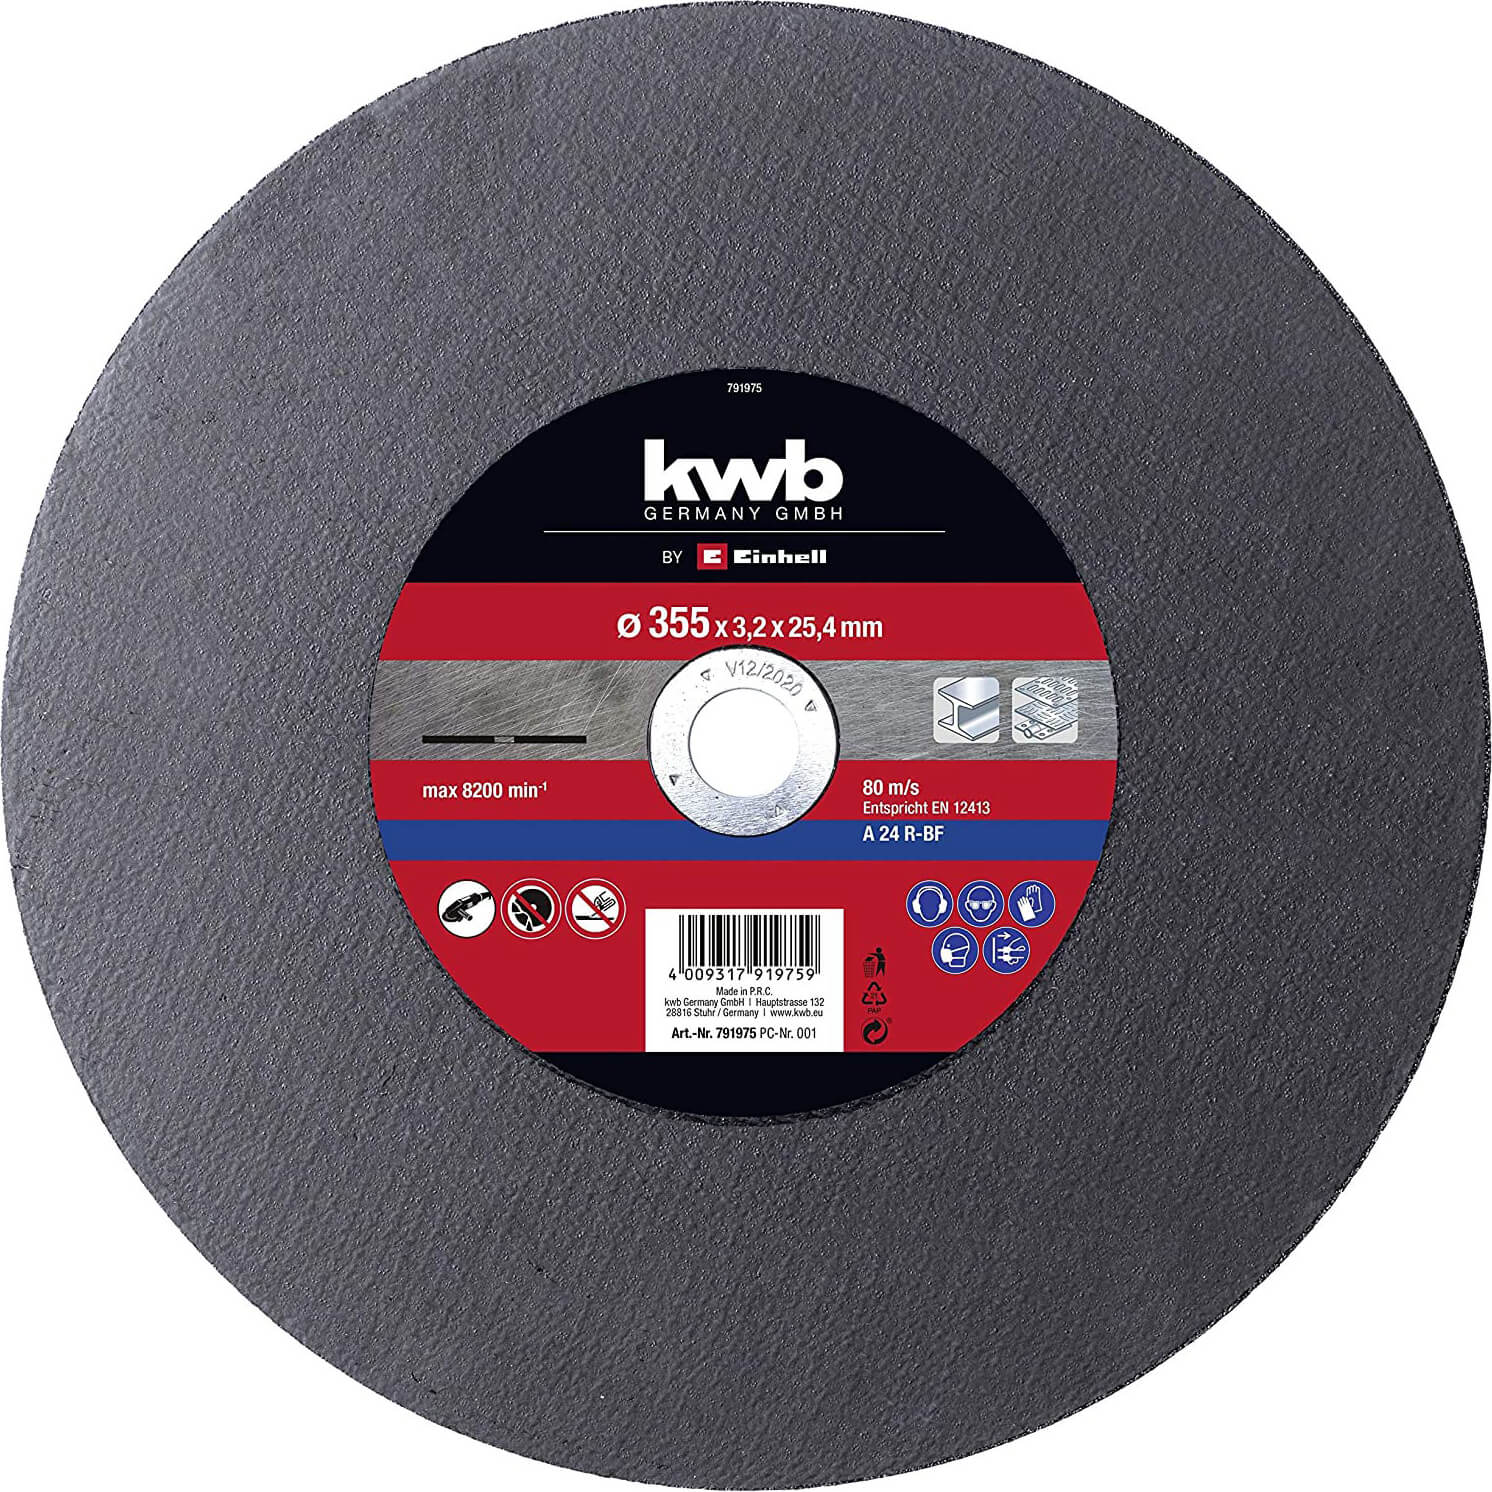 Photos - Cutting Disc Einhell Metal Cutting Saw Disc 355mm 25.4mm 